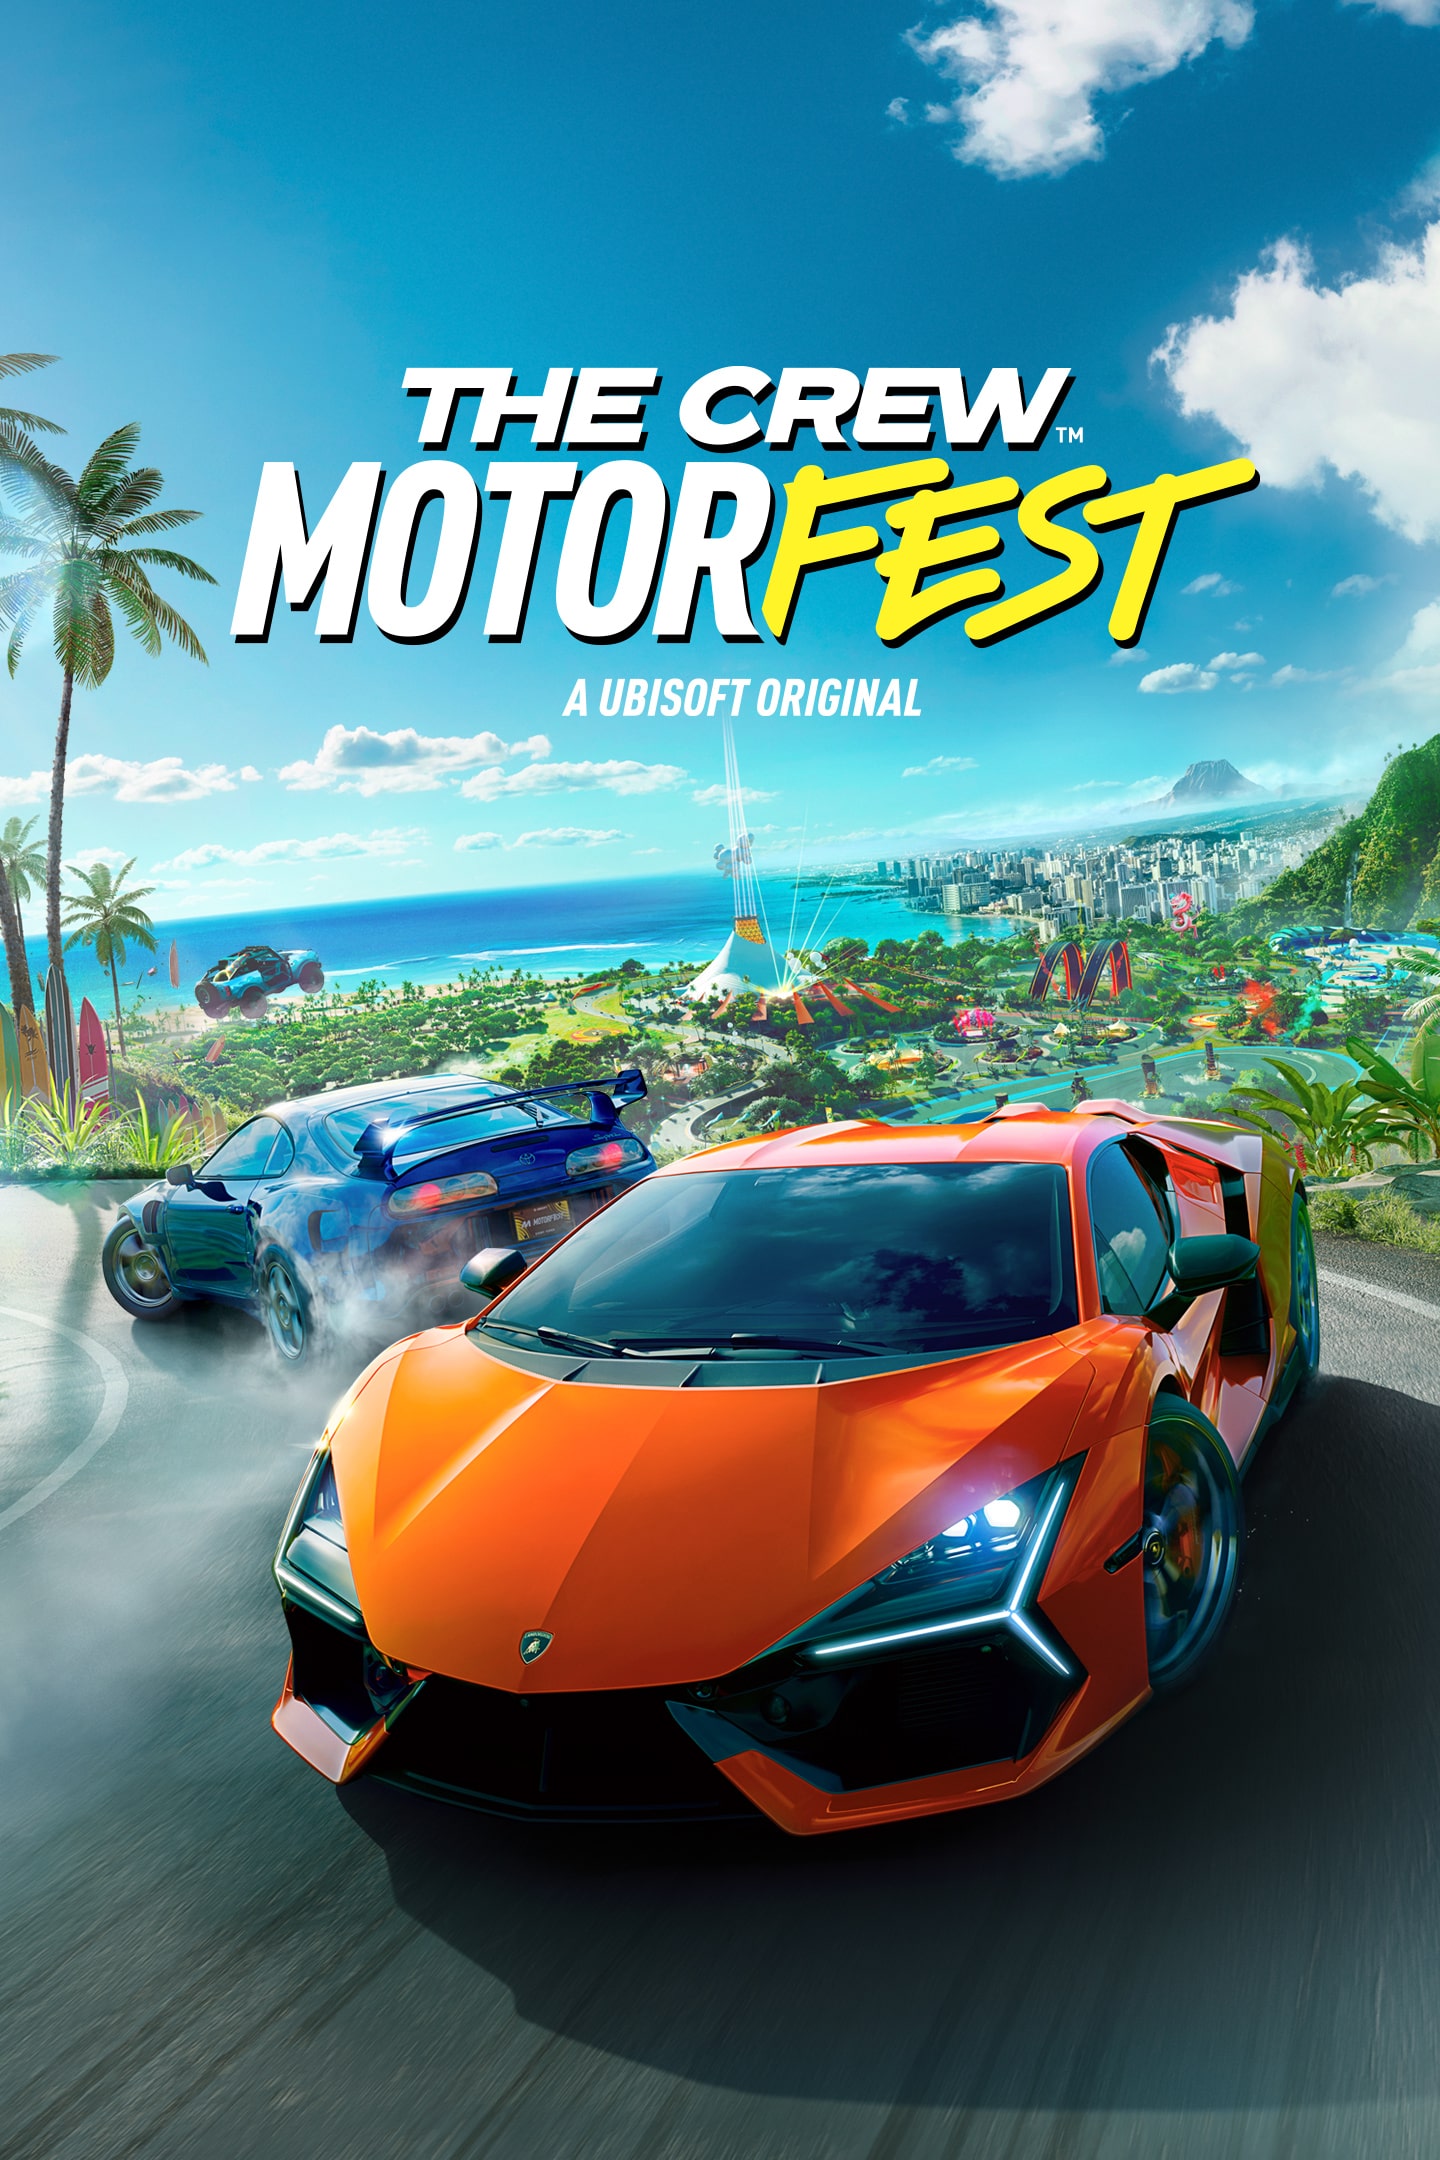 The Crew Motorfest on X: #TheCrewMotorfest cross play features